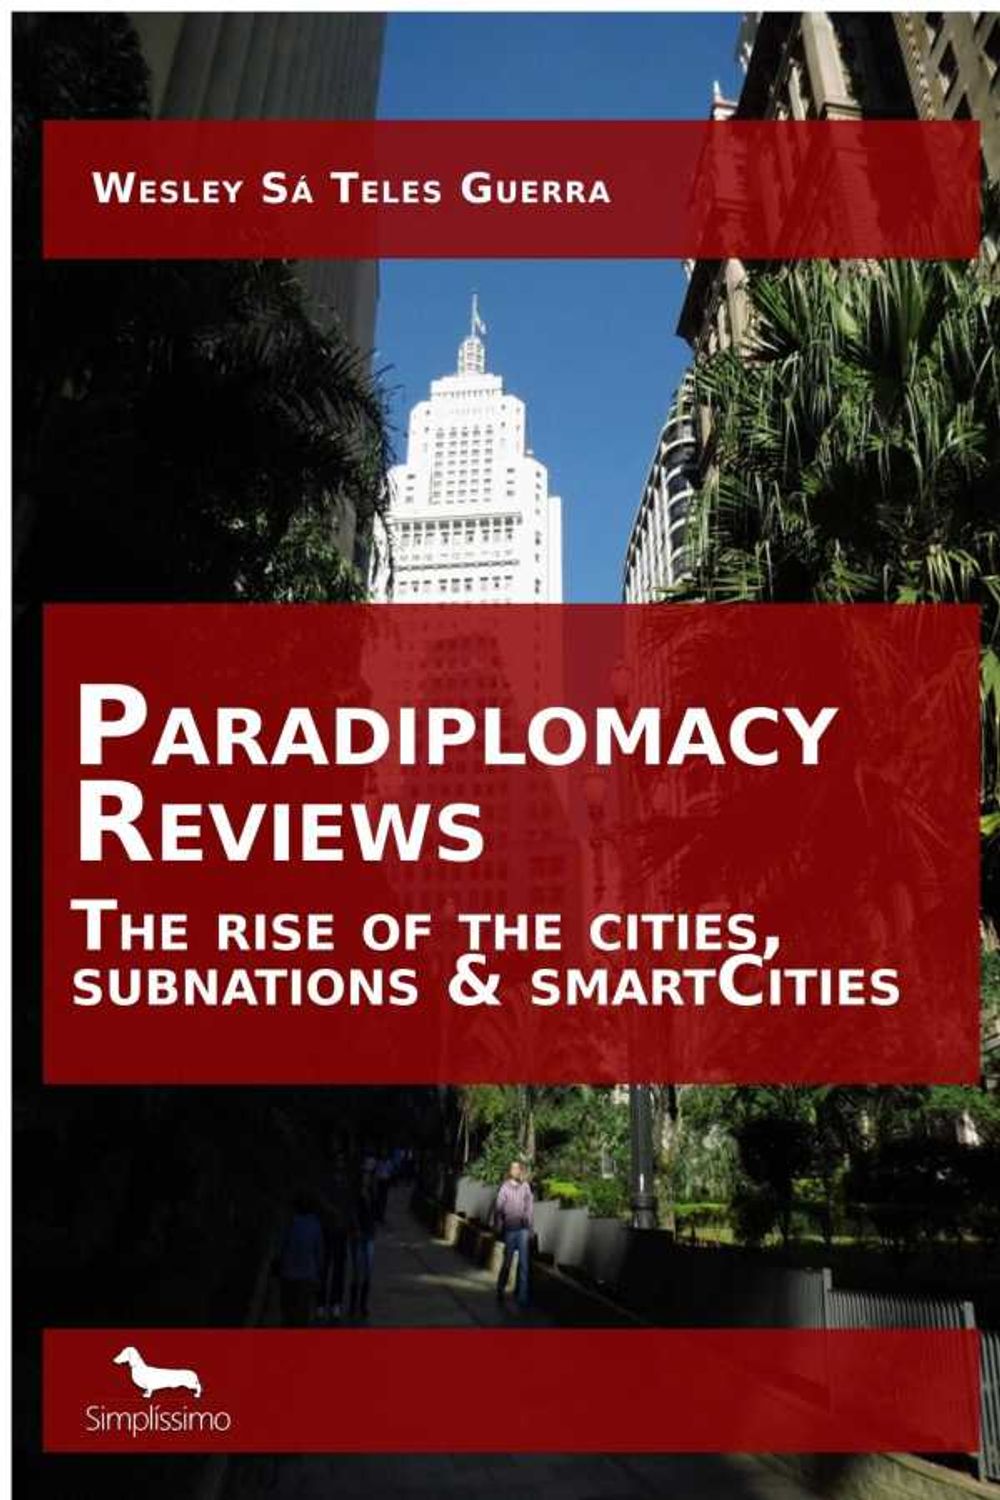 bw-paradiplomacy-reviews-simplssimo-9786558902683